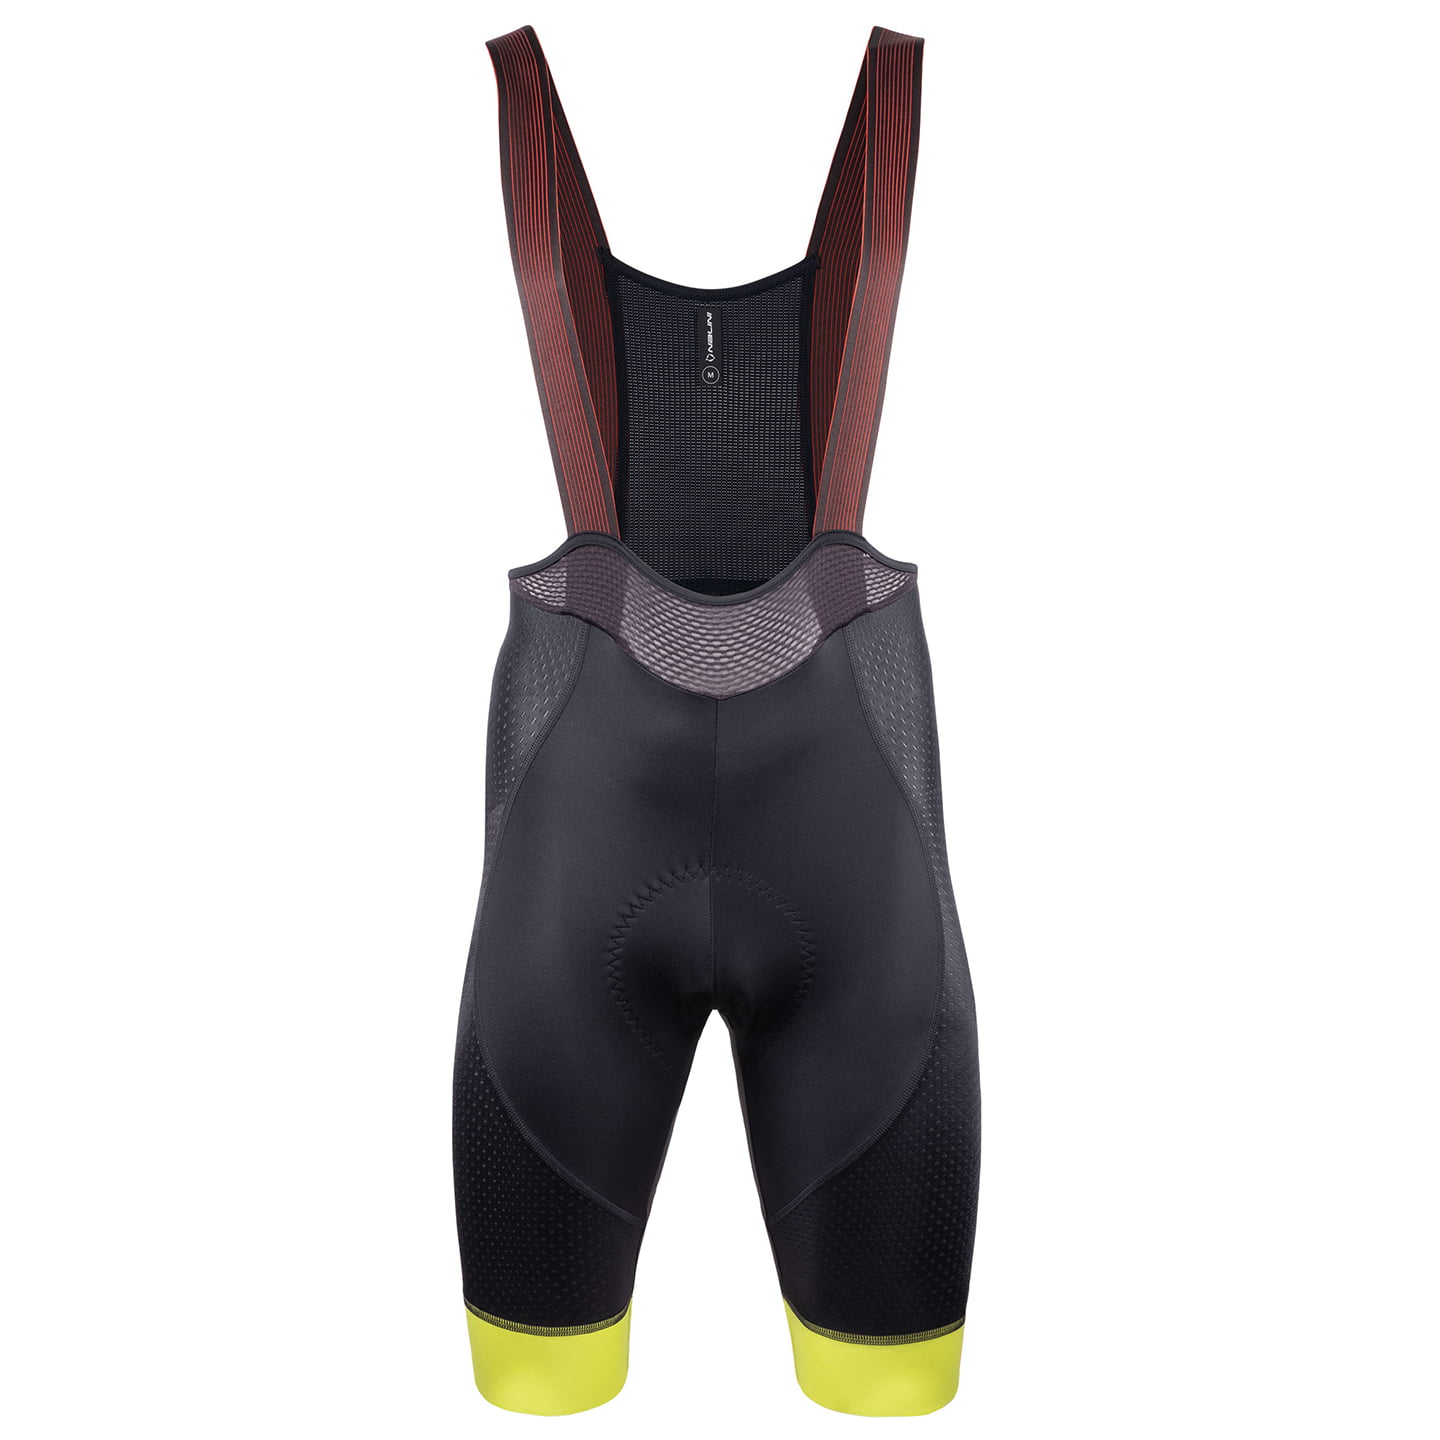 NALINI Color Bib Shorts Bib Shorts, for men, size 2XL, Cycle shorts, Cycling clothing